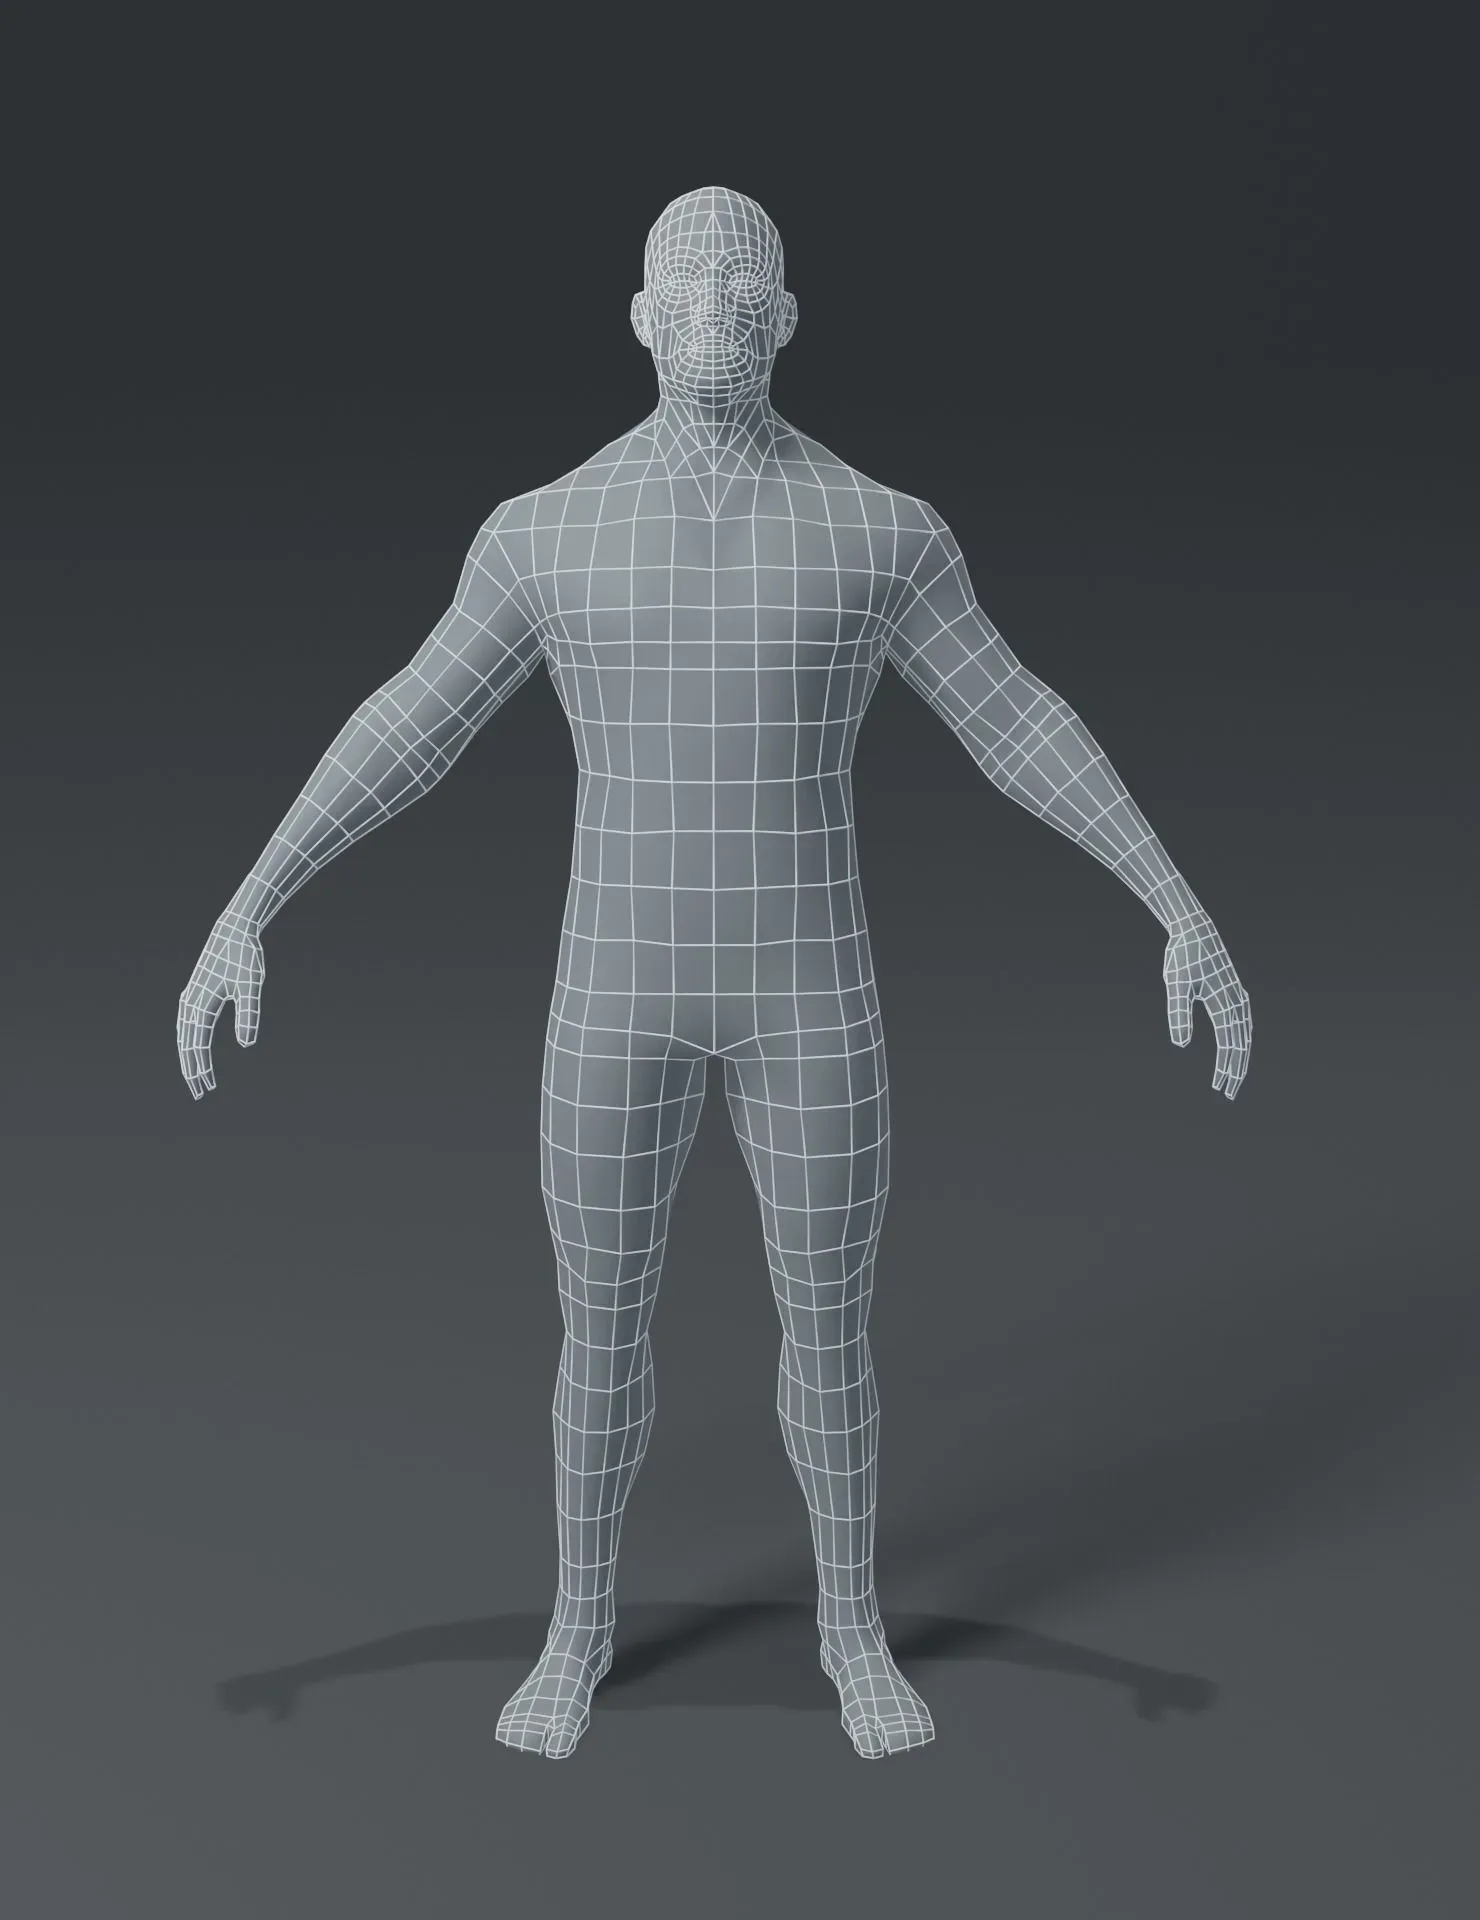 Male Body Base Mesh 3D Model